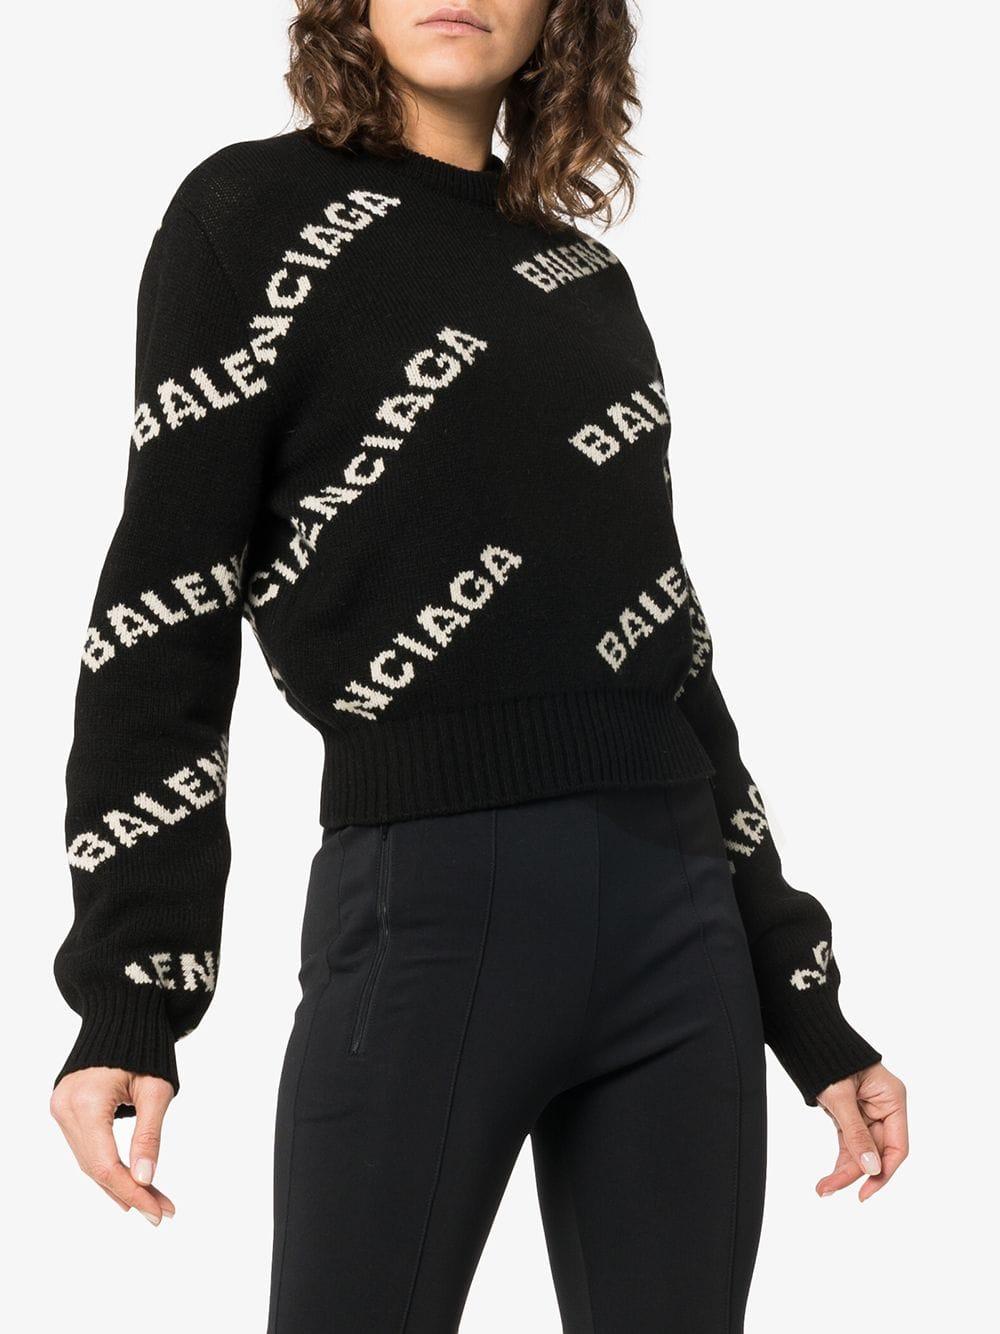 Balenciaga Intarsia Wool-blend Sweater in Black | Lyst